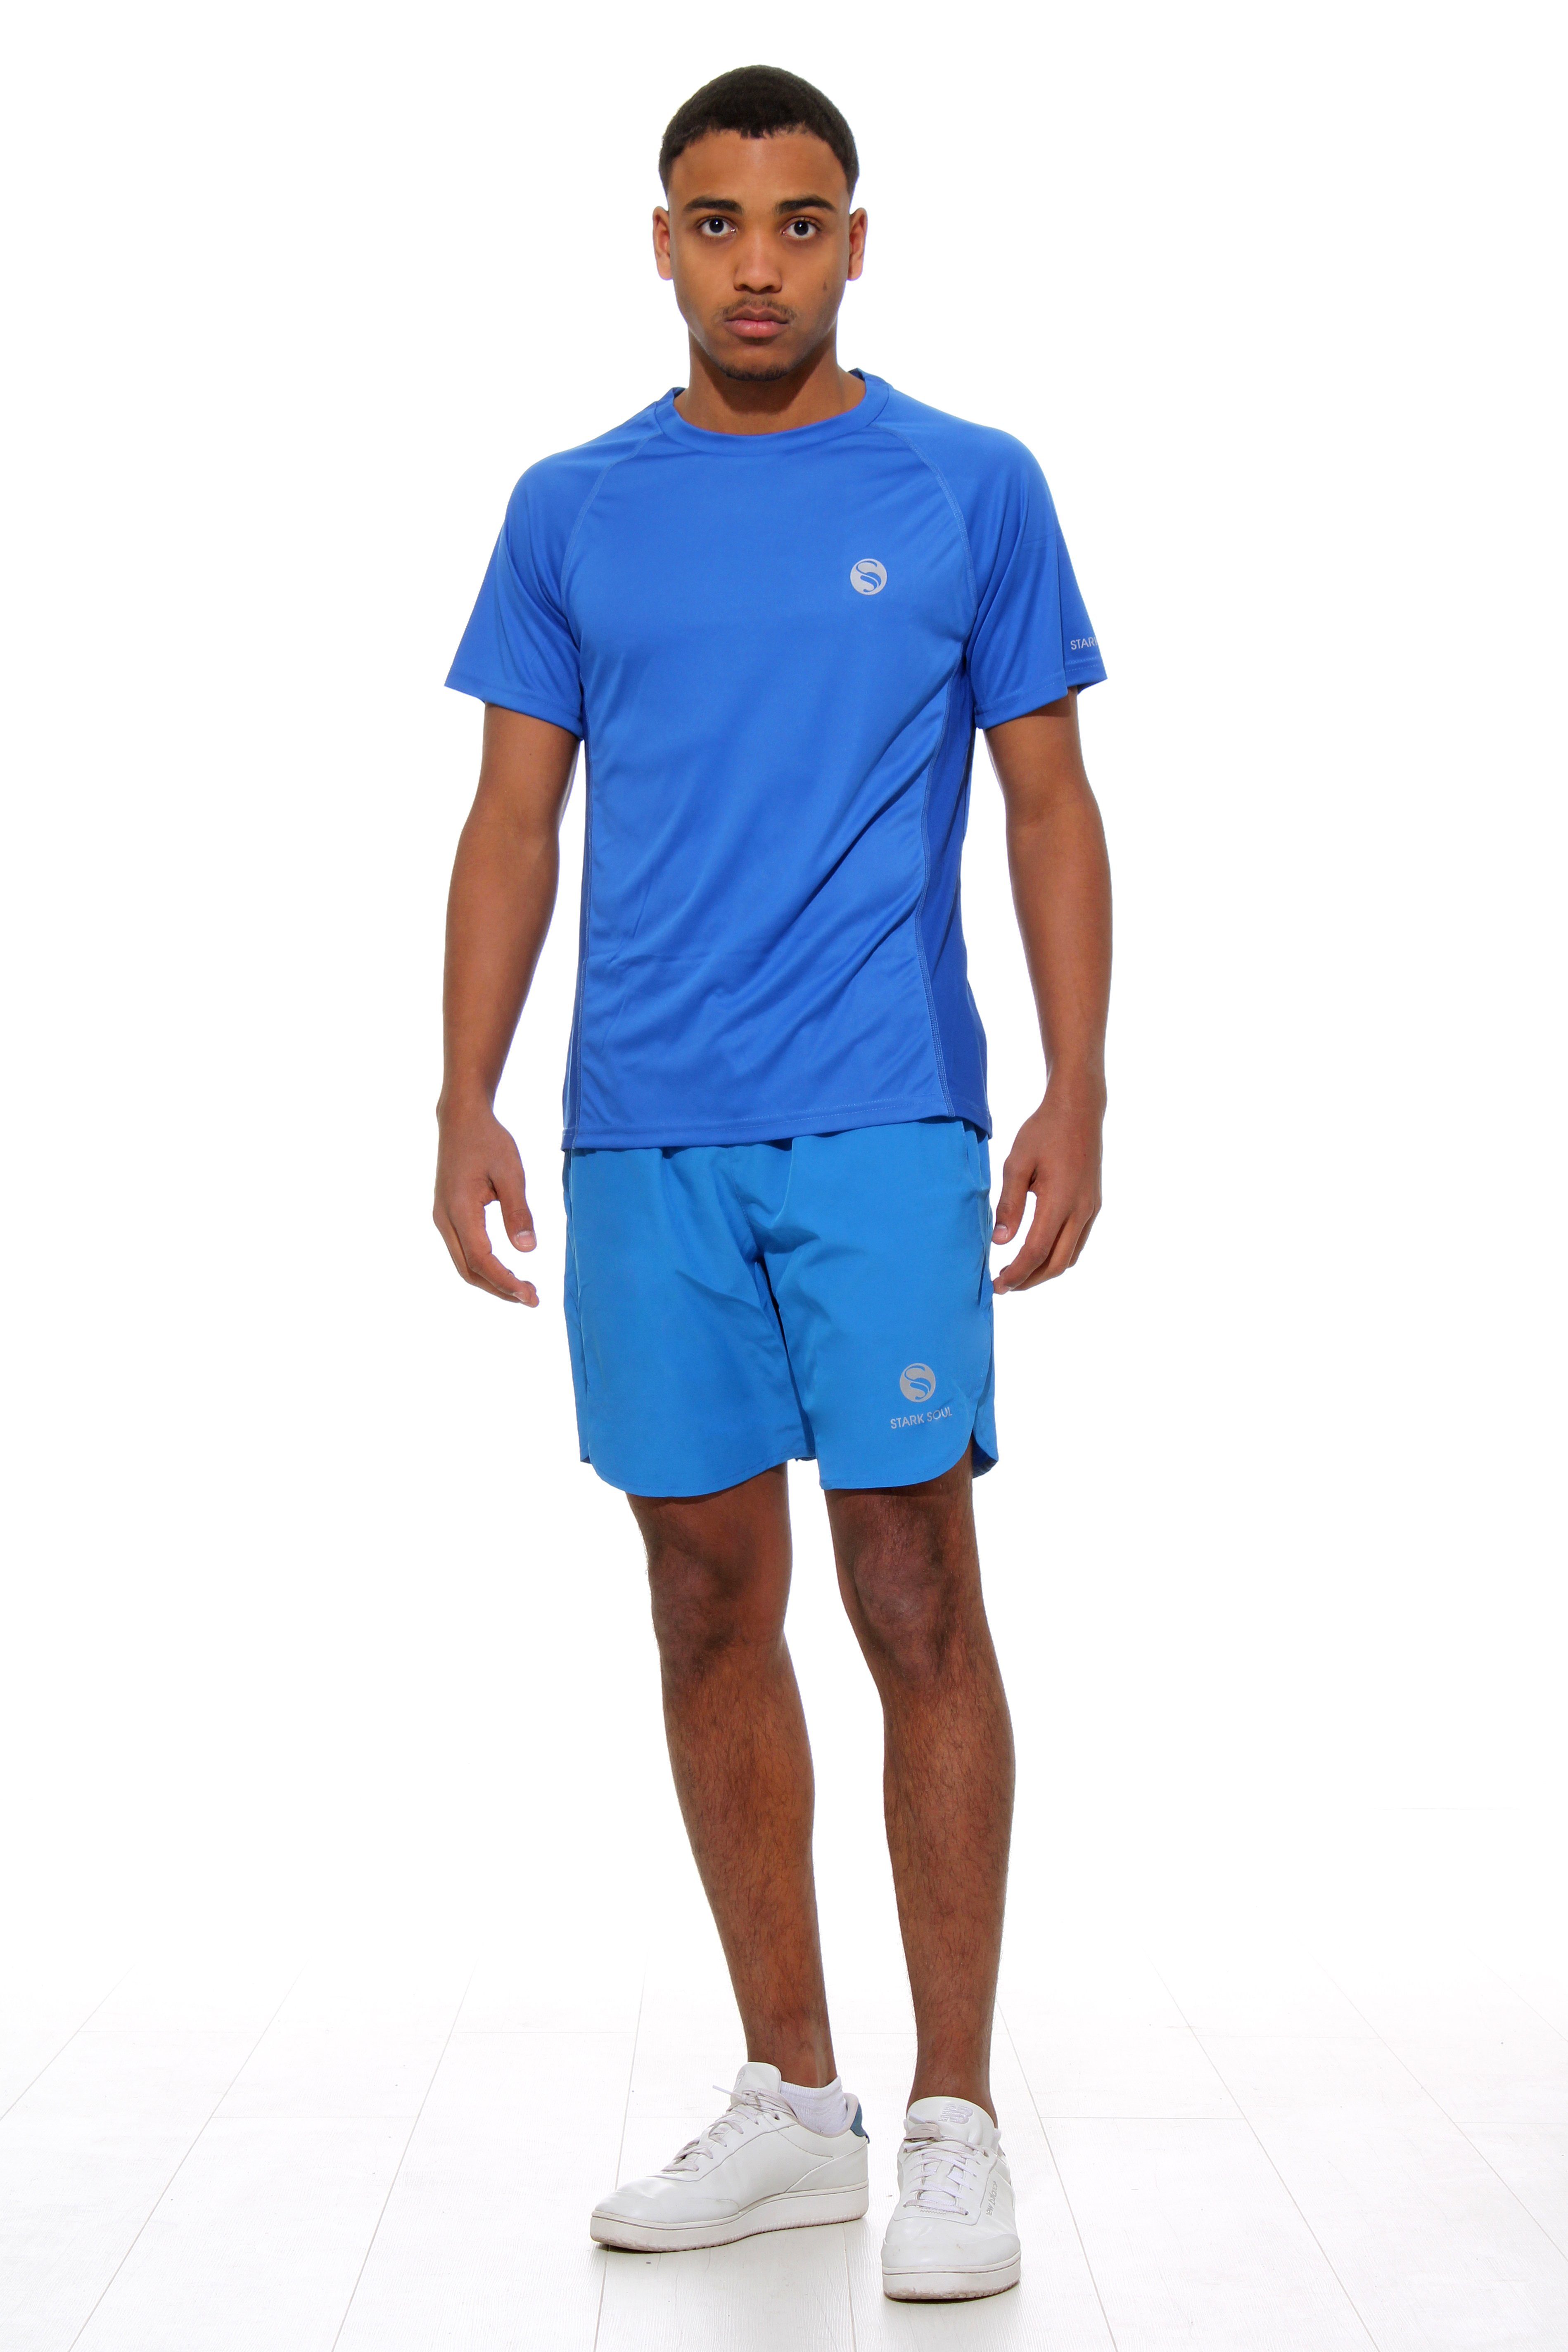 Stark Spezielles -Reflect-, Trainingsshort Blau Dry Trainingsshorts Shorts Soul® Funktionshose, Material Quick Sport Herren